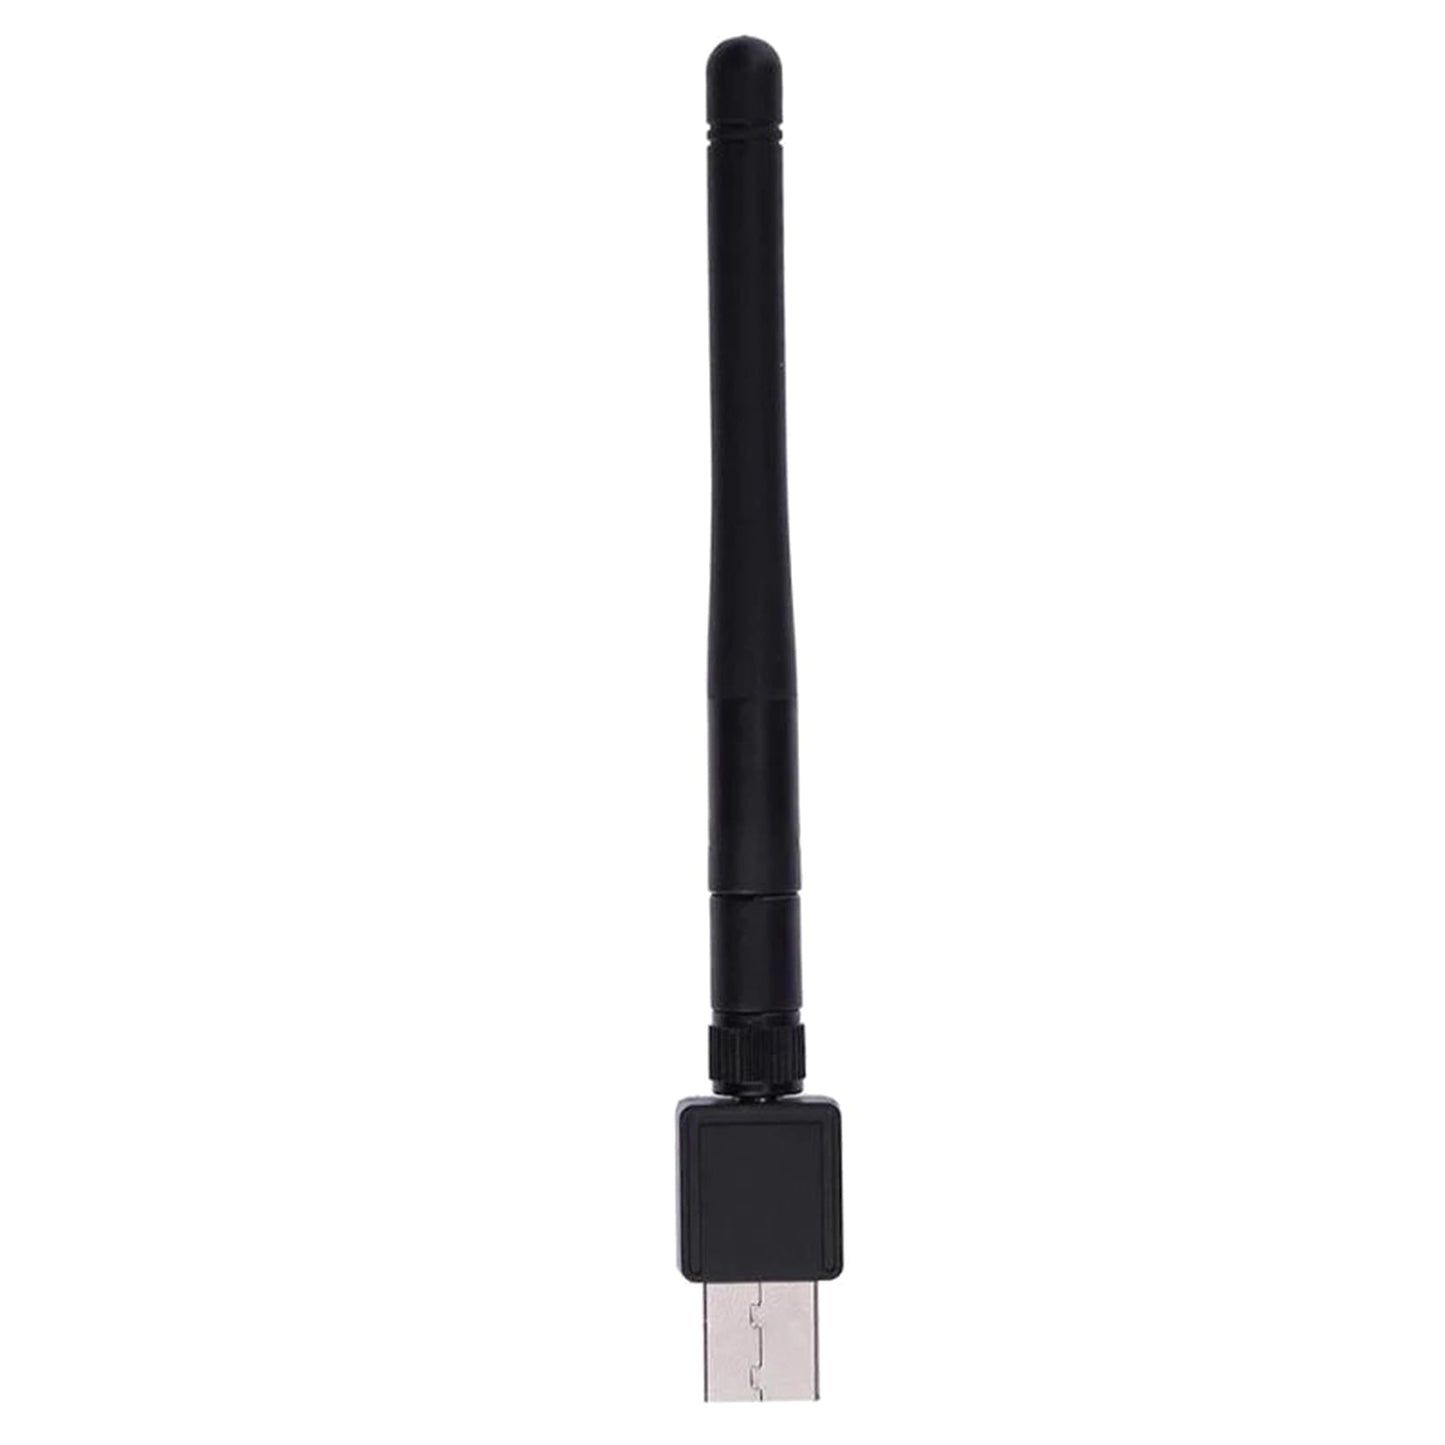 300Mbps Wireless USB WiFi Network Adapter 802.11N w/Antenna For Windows/XP/Mac